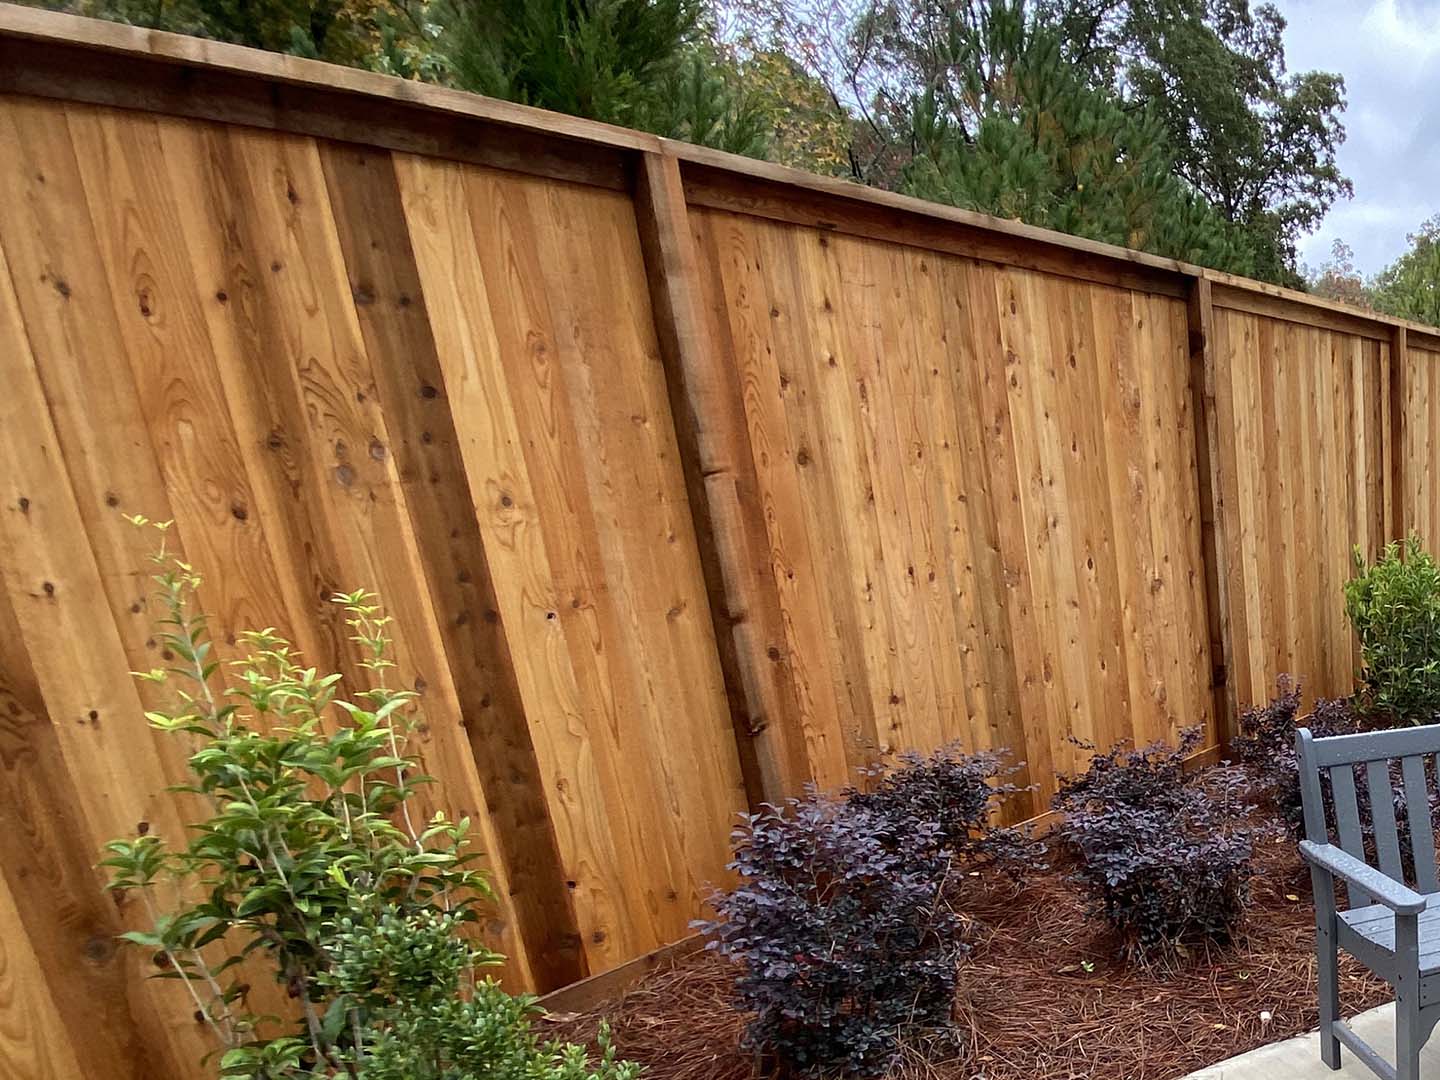 Vestavia Al cap and trim style wood fence